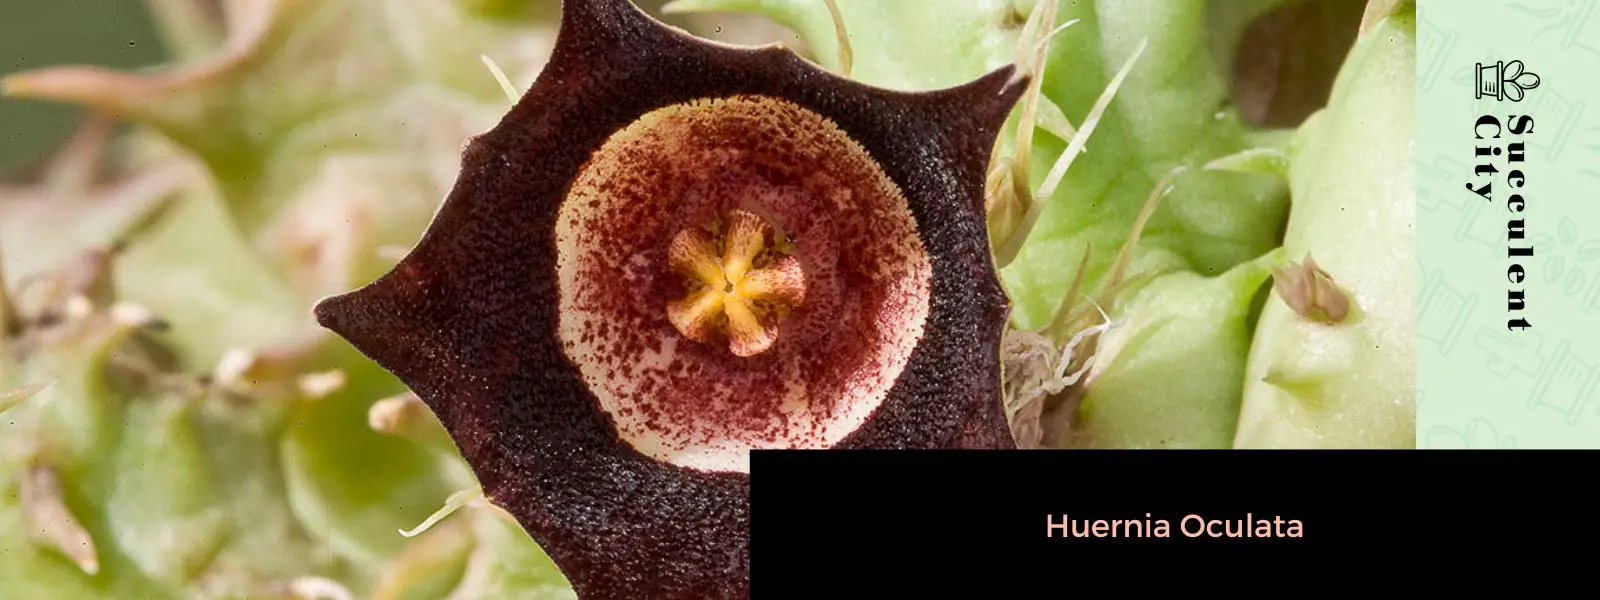 Huernia oculata (huernia mancha ocular)